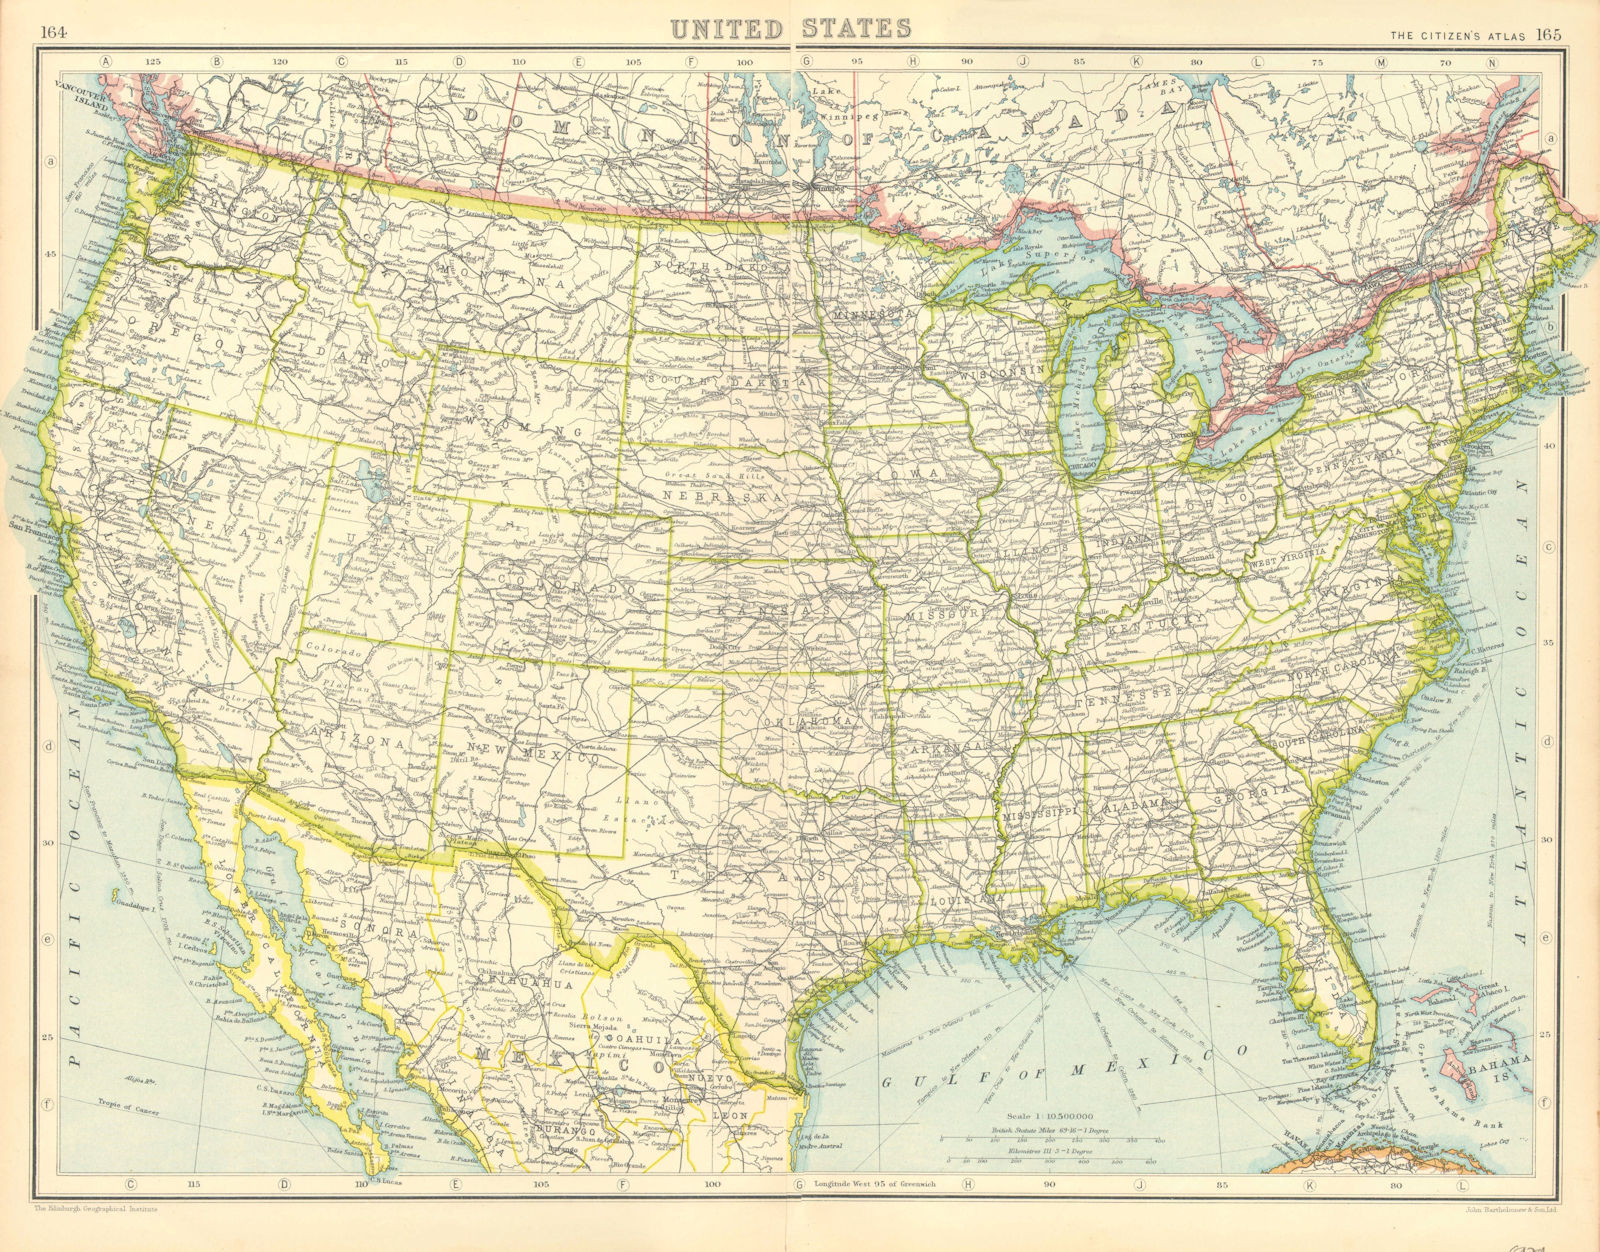 Associate Product USA. United States general map. BARTHOLOMEW 1924 old vintage plan chart